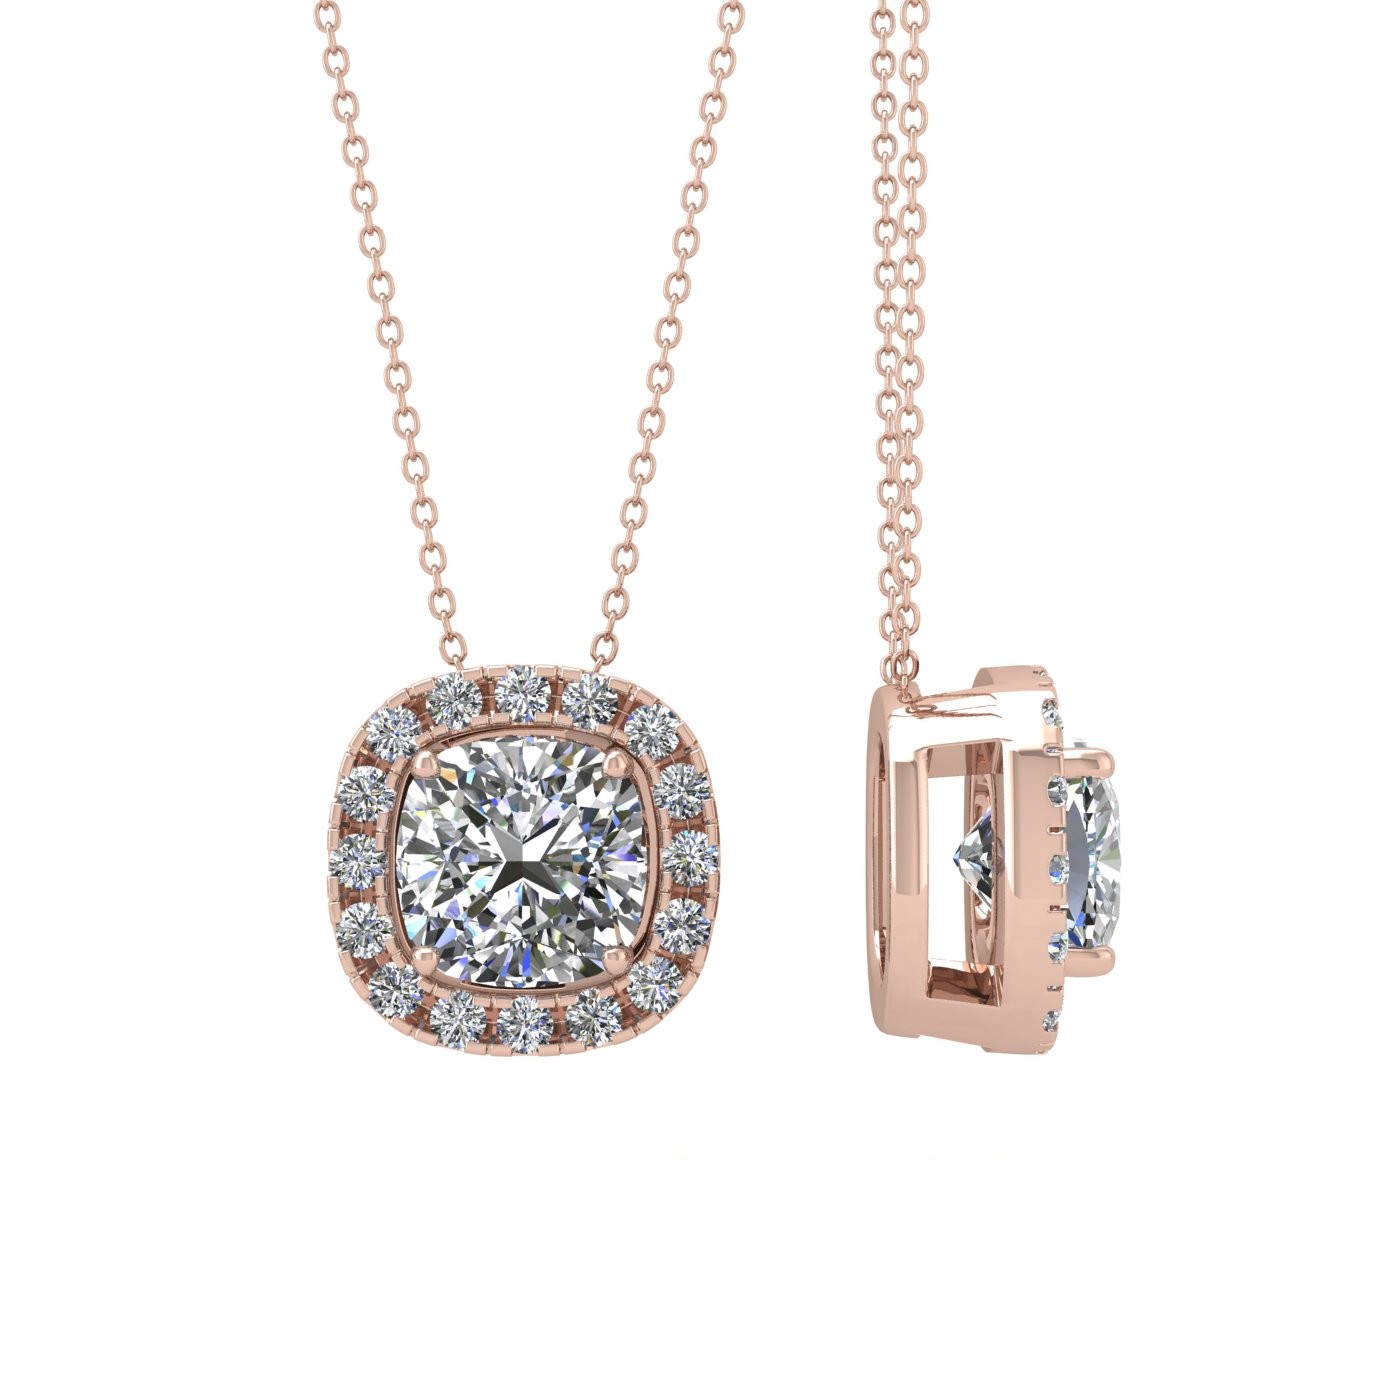 18k rose gold  1,5 ct 4 prongs cushion shape diamond pendant with diamond pavÉ set halo